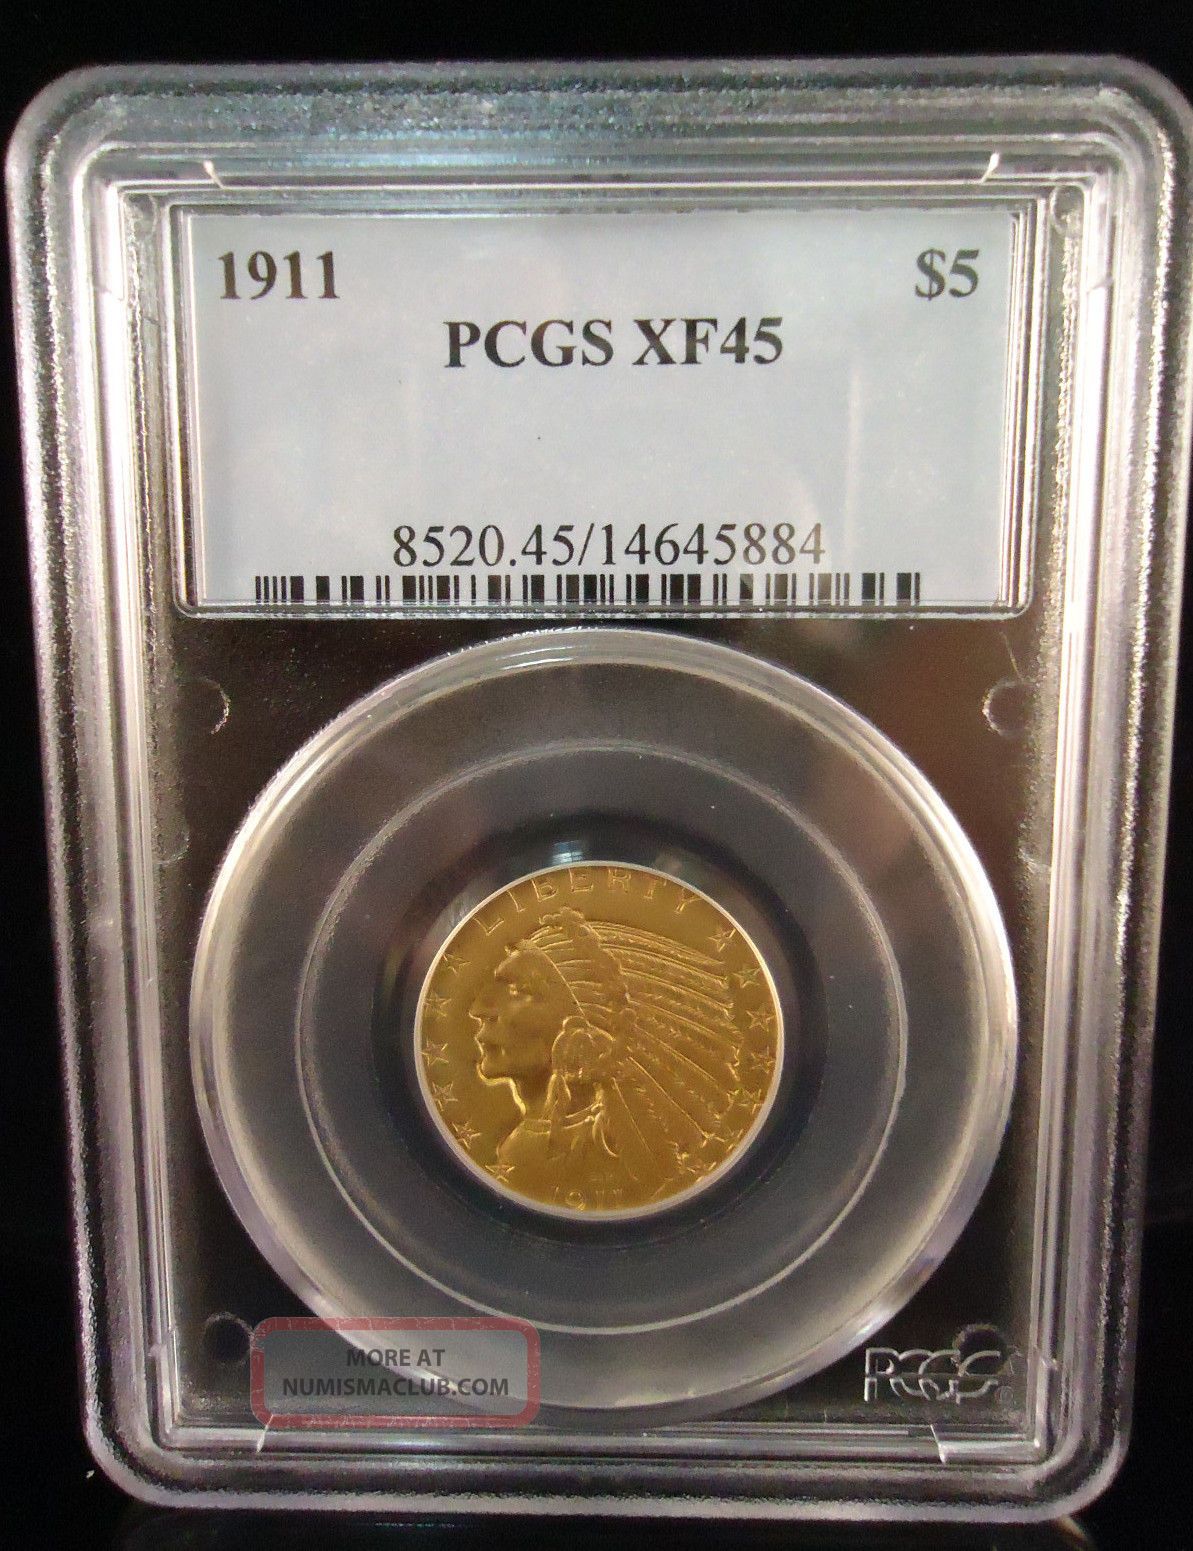 1911 $5 Gold Indian Head Half Eagle - Xf45 Pcgs Low Opening Bid